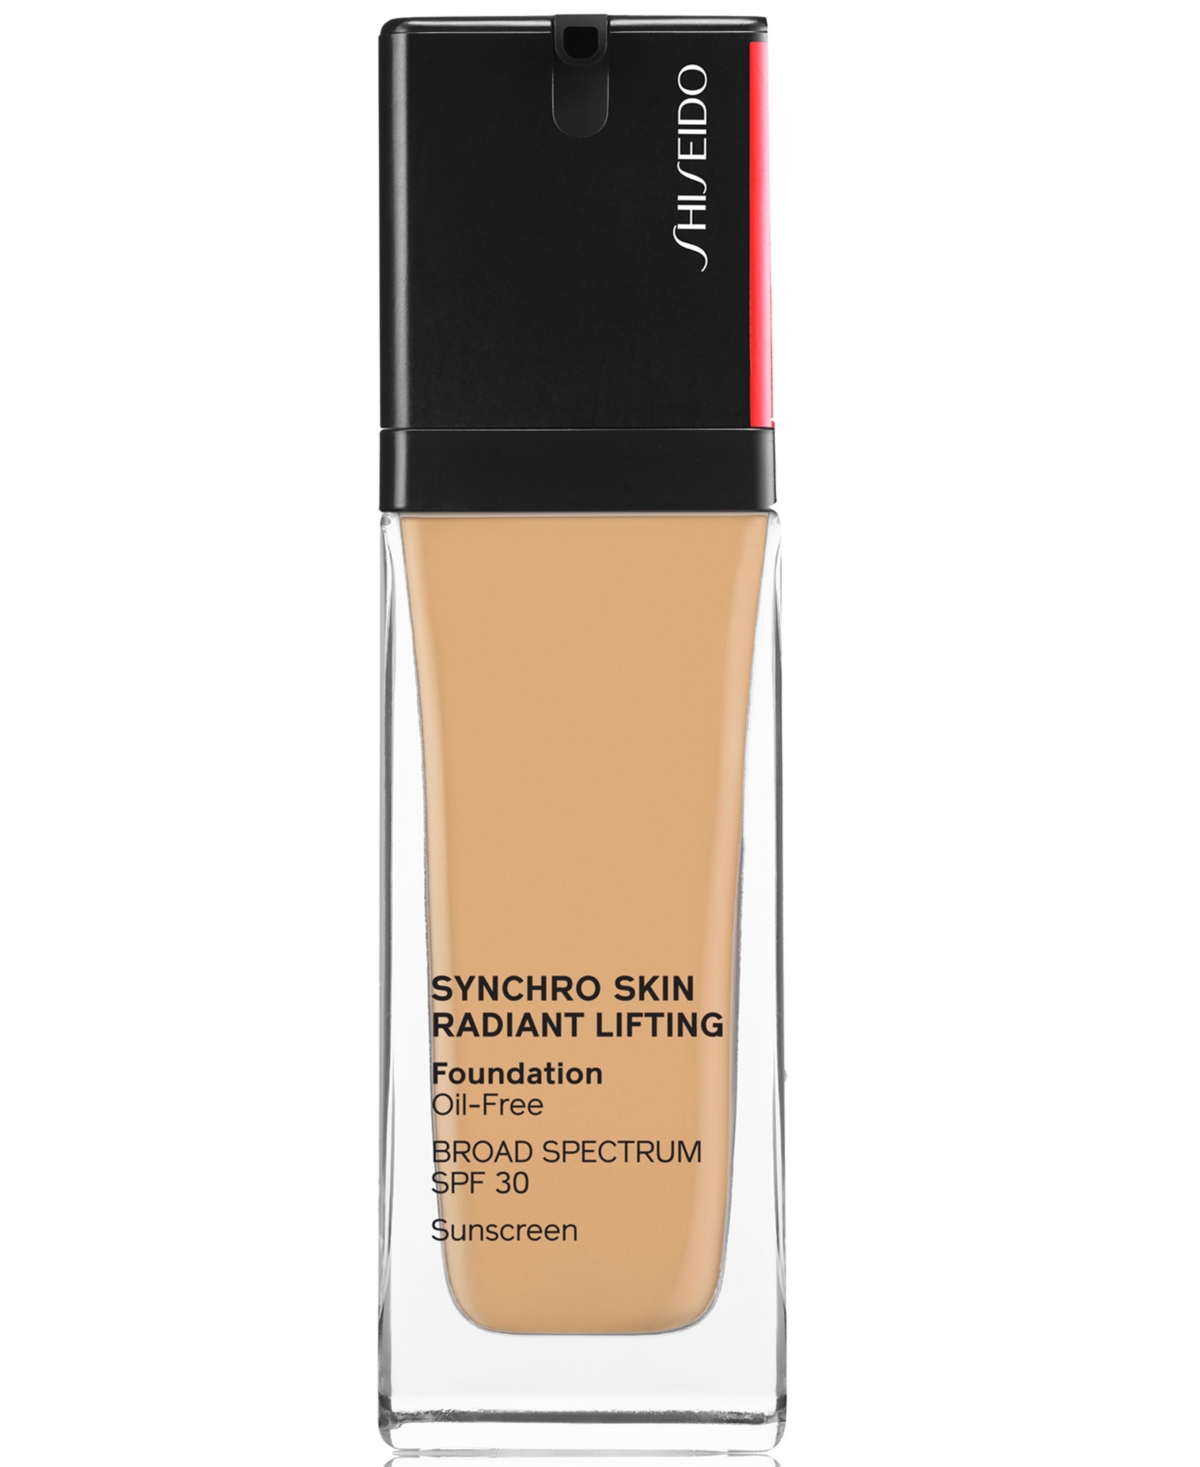 Shiseido Synchro Skin Radiant Lifting Foundation, 30 ml In Oak - Slight Olive Tone For Medium Skin